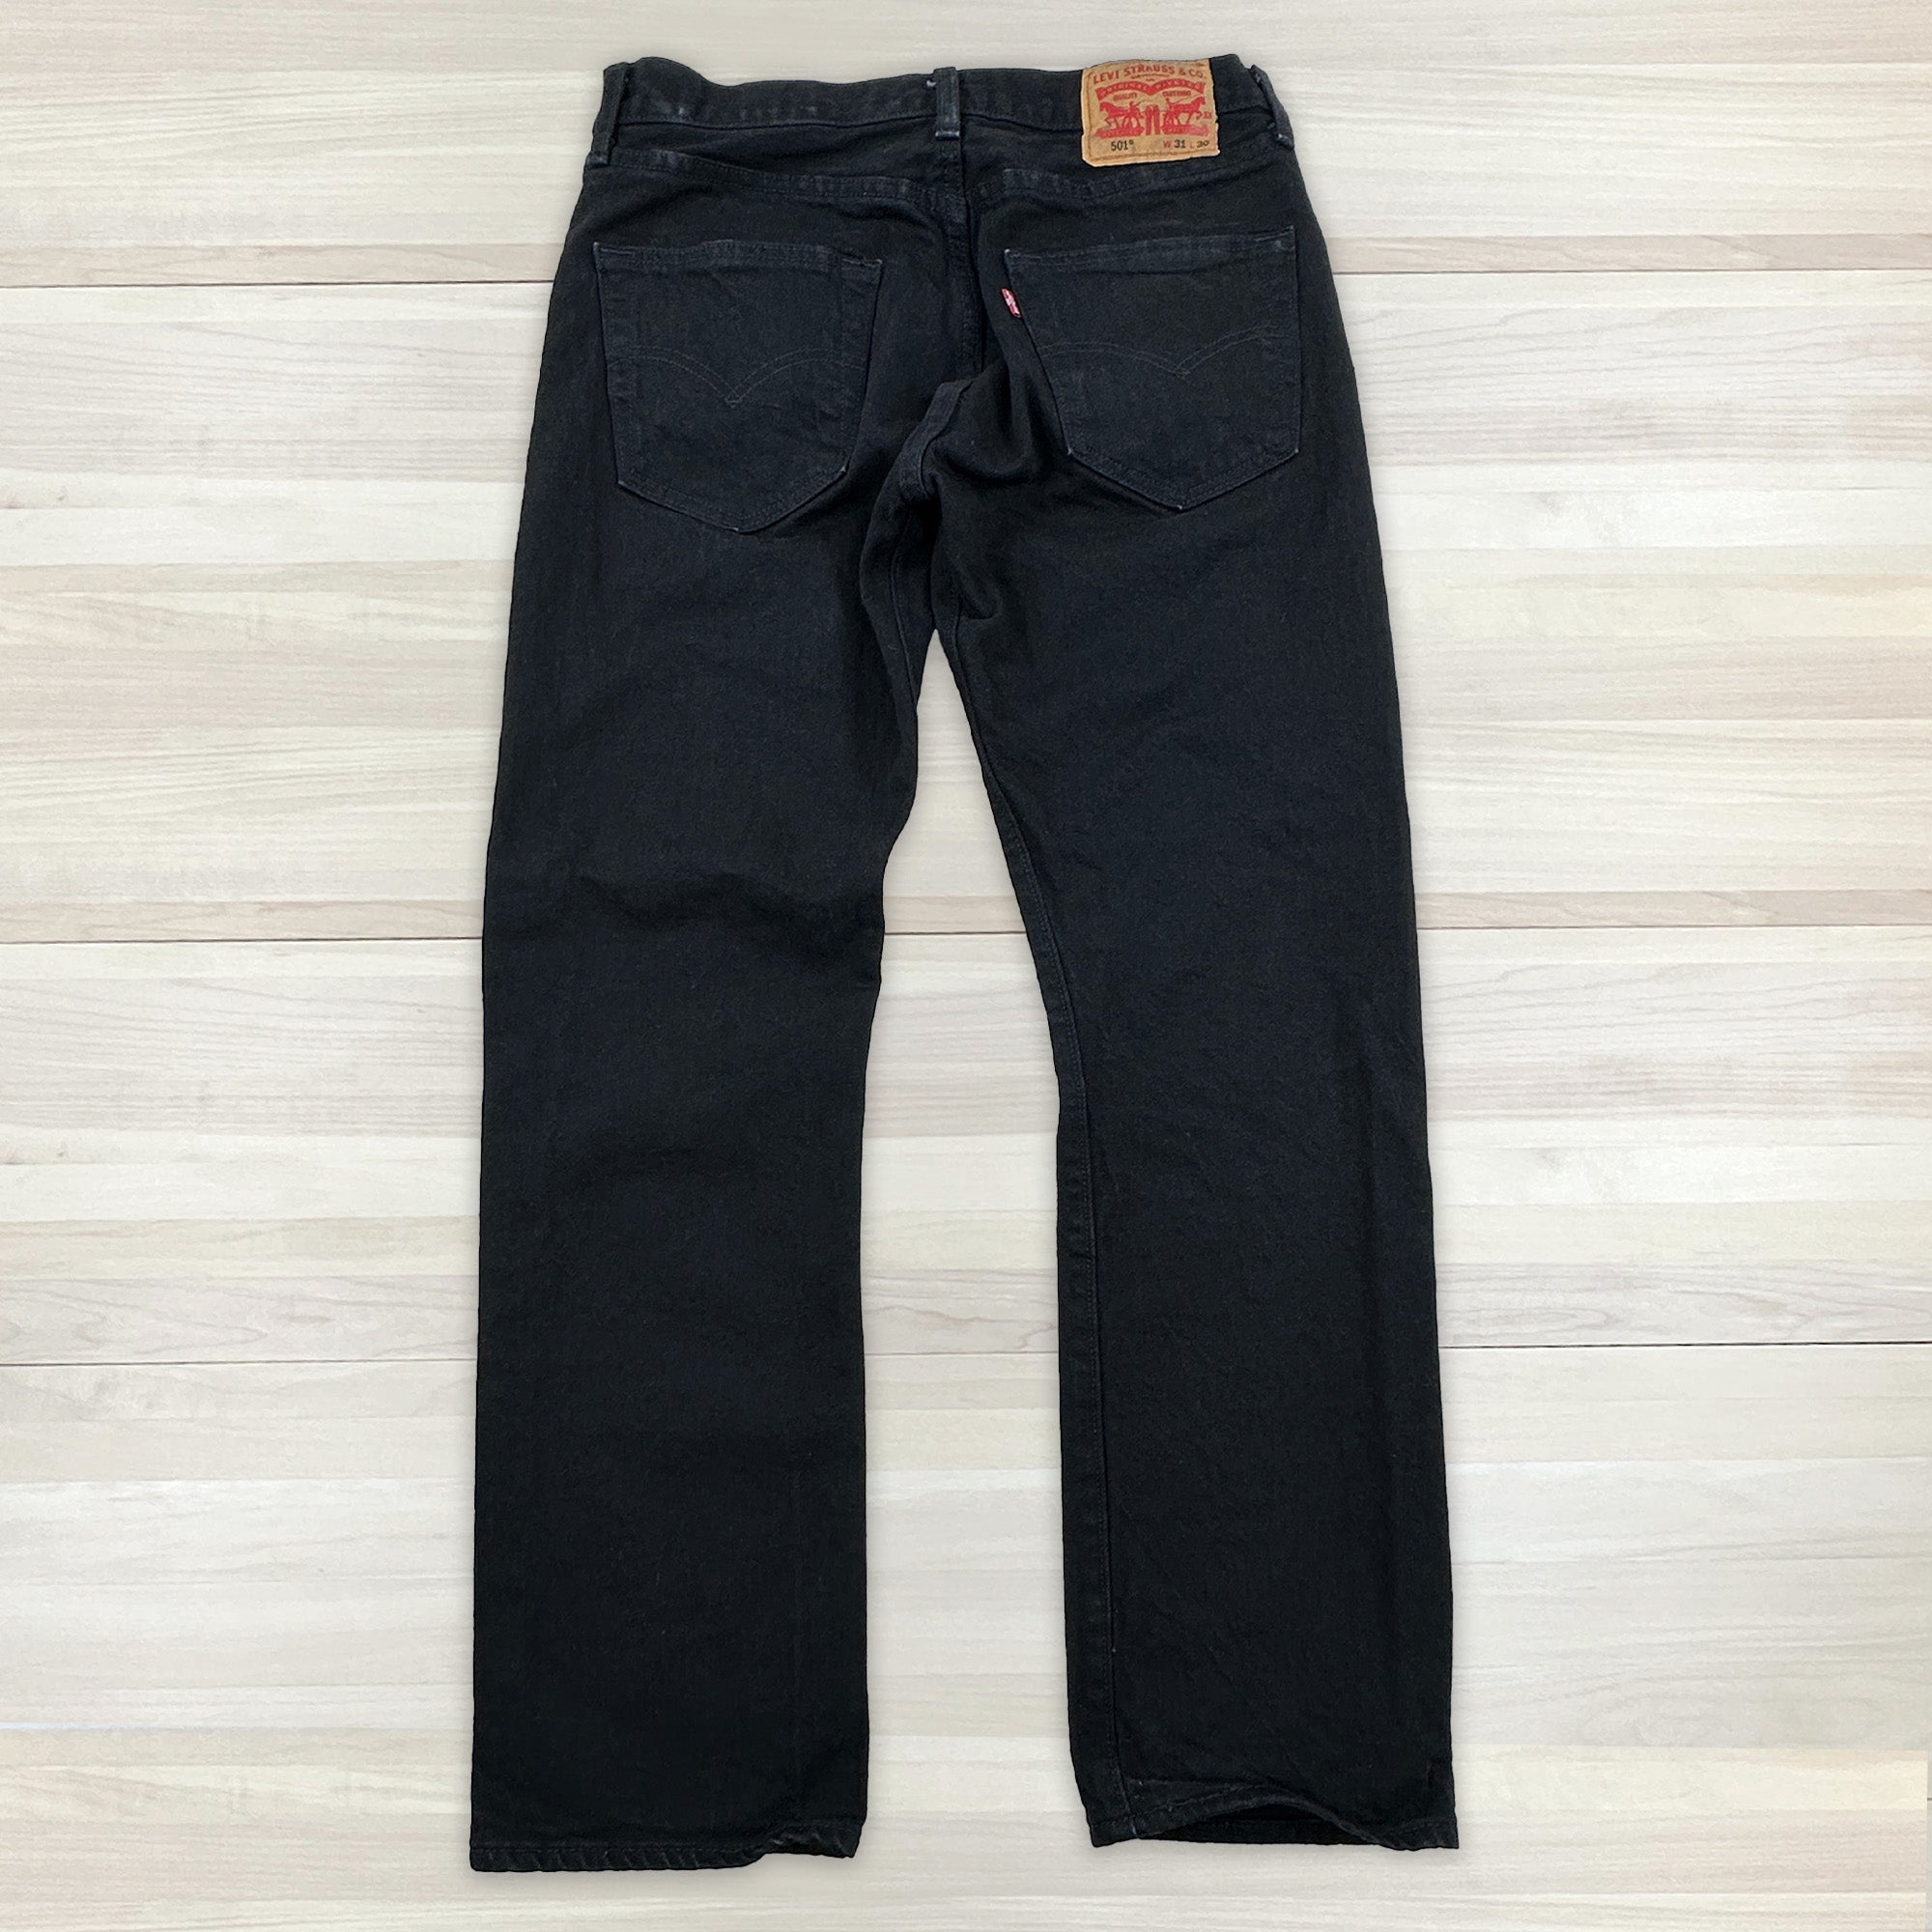 Men's Black Levi's 501 Straight Leg Jeans - Tagged: 31x30 / Measures 30x29 - 0